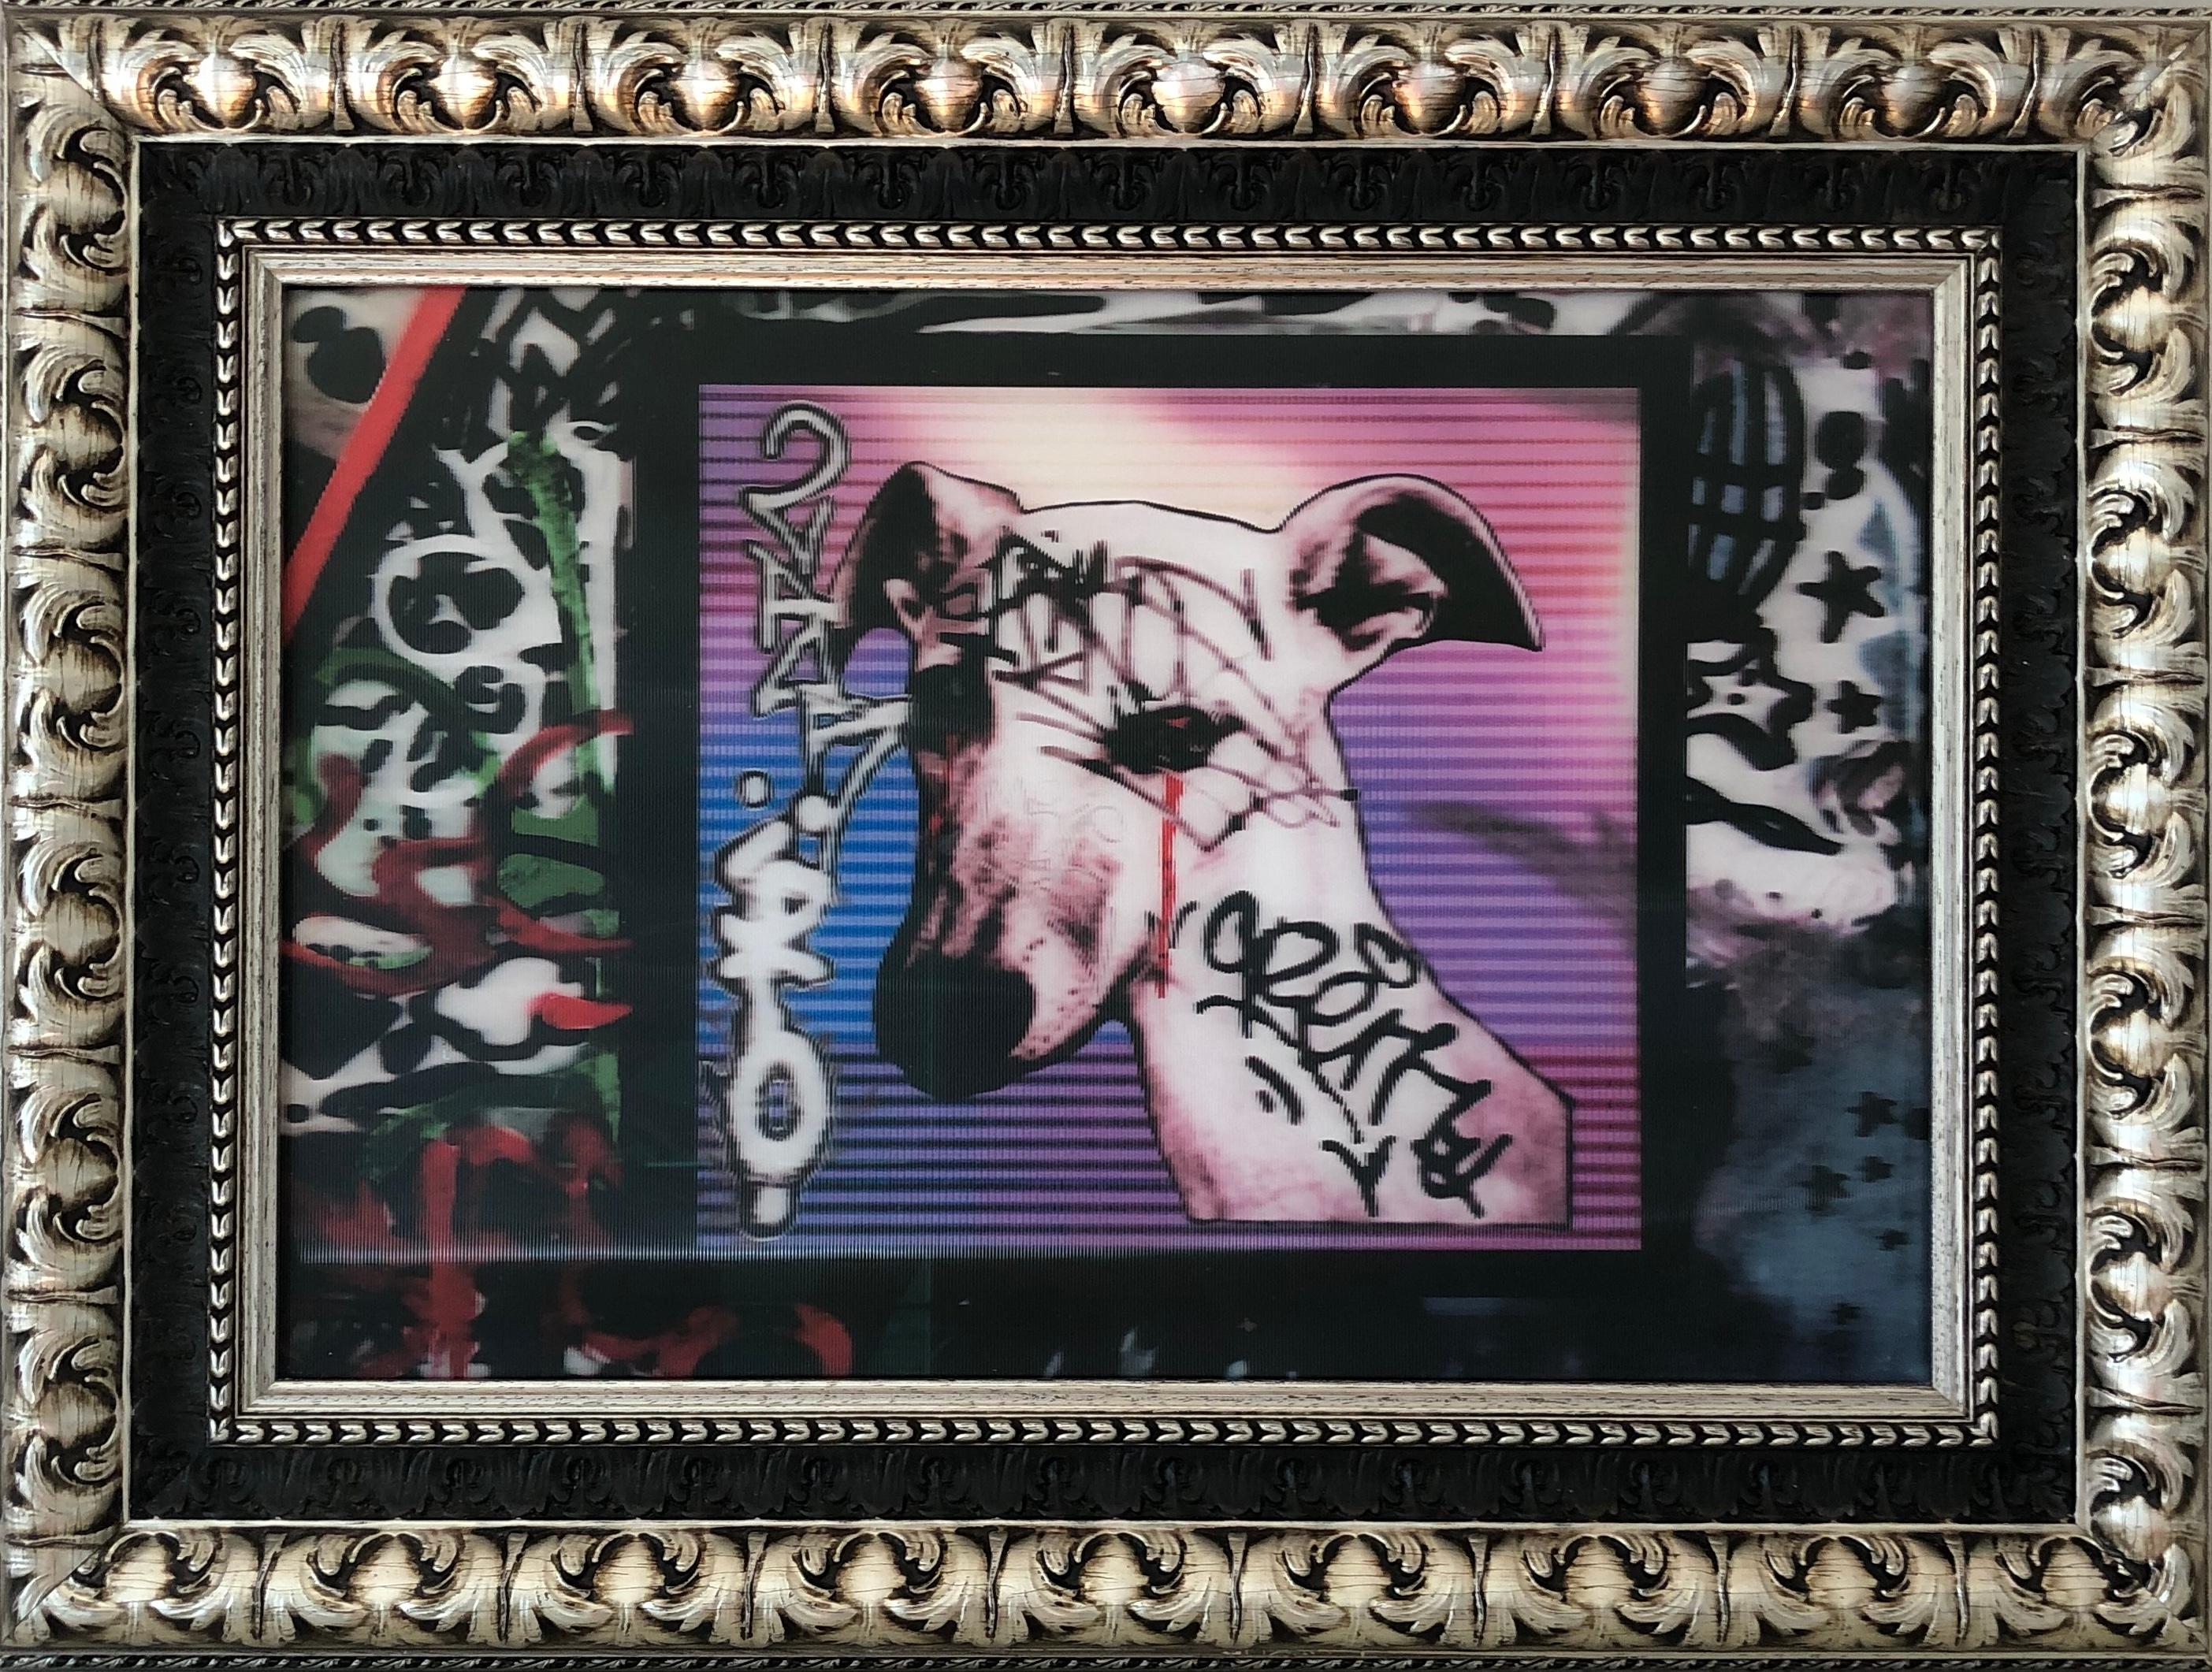 Le Chien de les Frigos - lenticular photo, graffiti in pink, red, white, blue, black